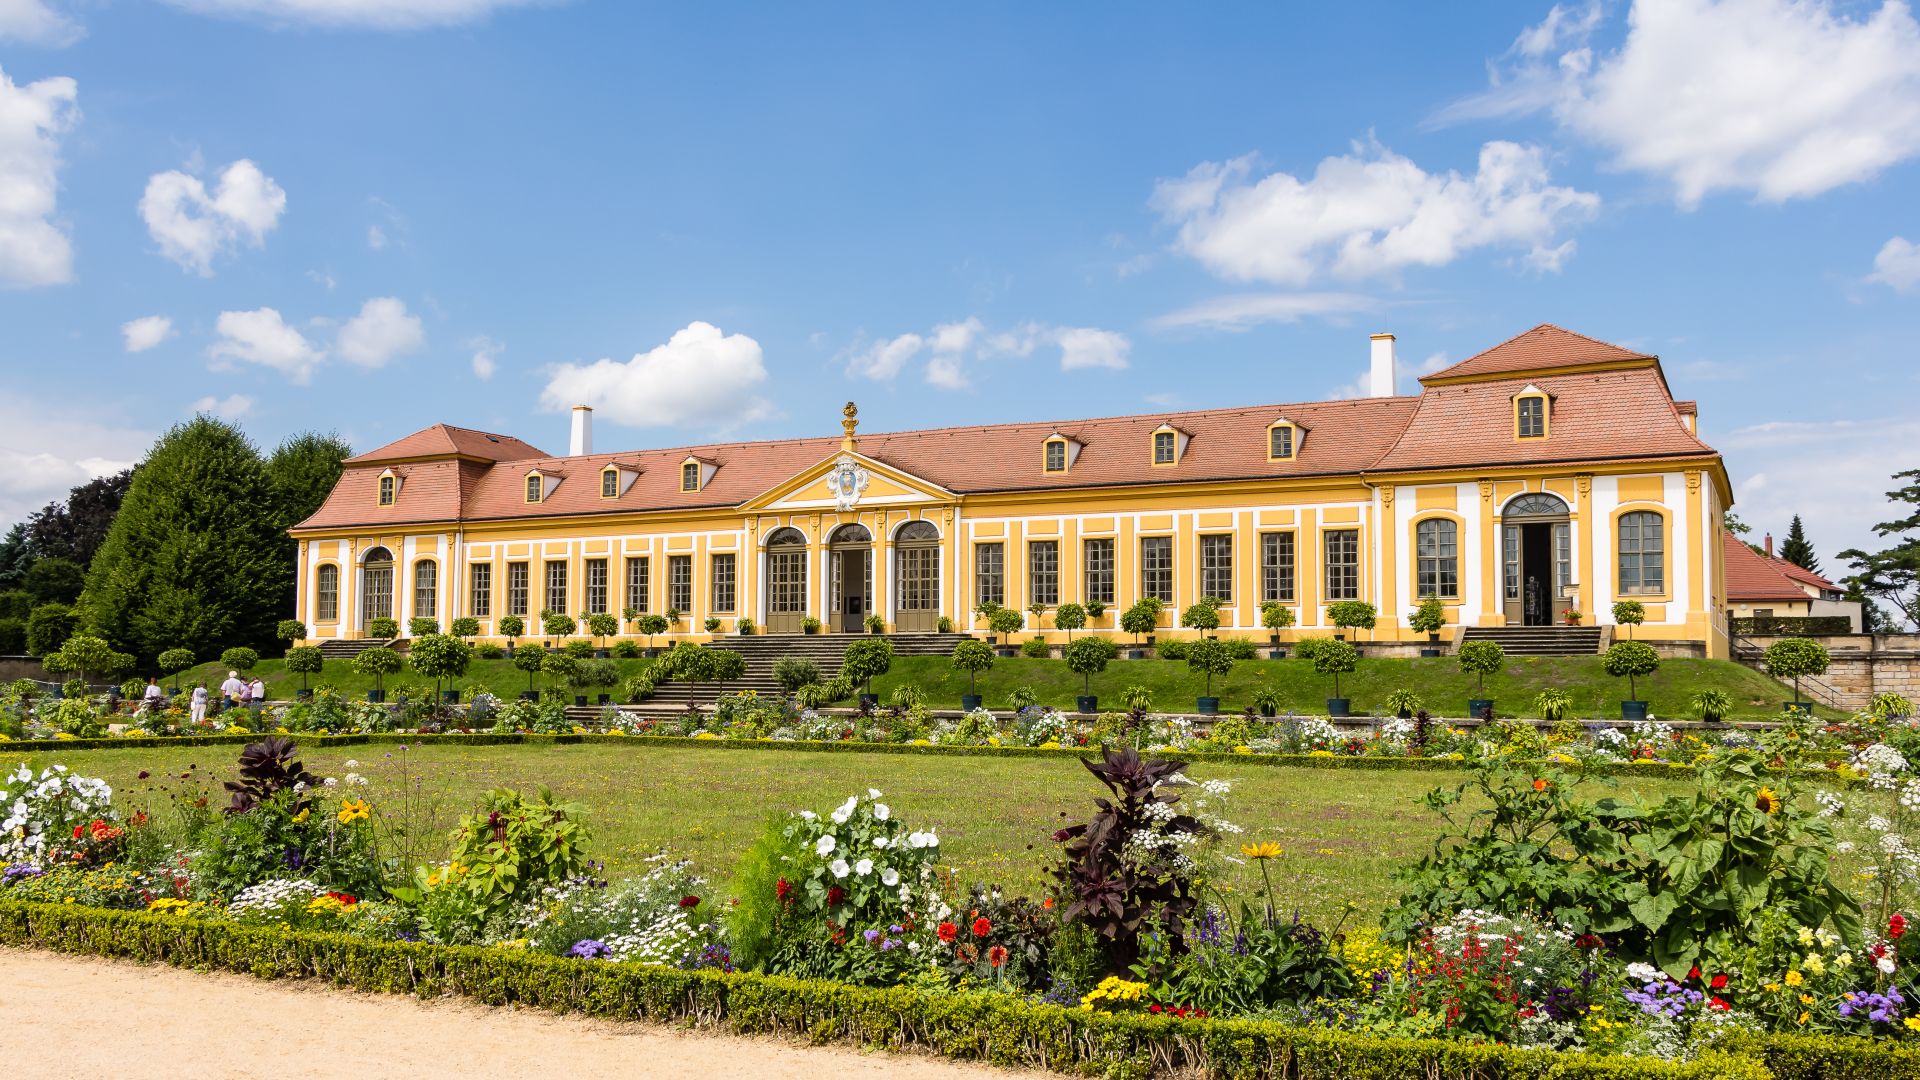 Heidenau: Großsedlitz Baroque Garden